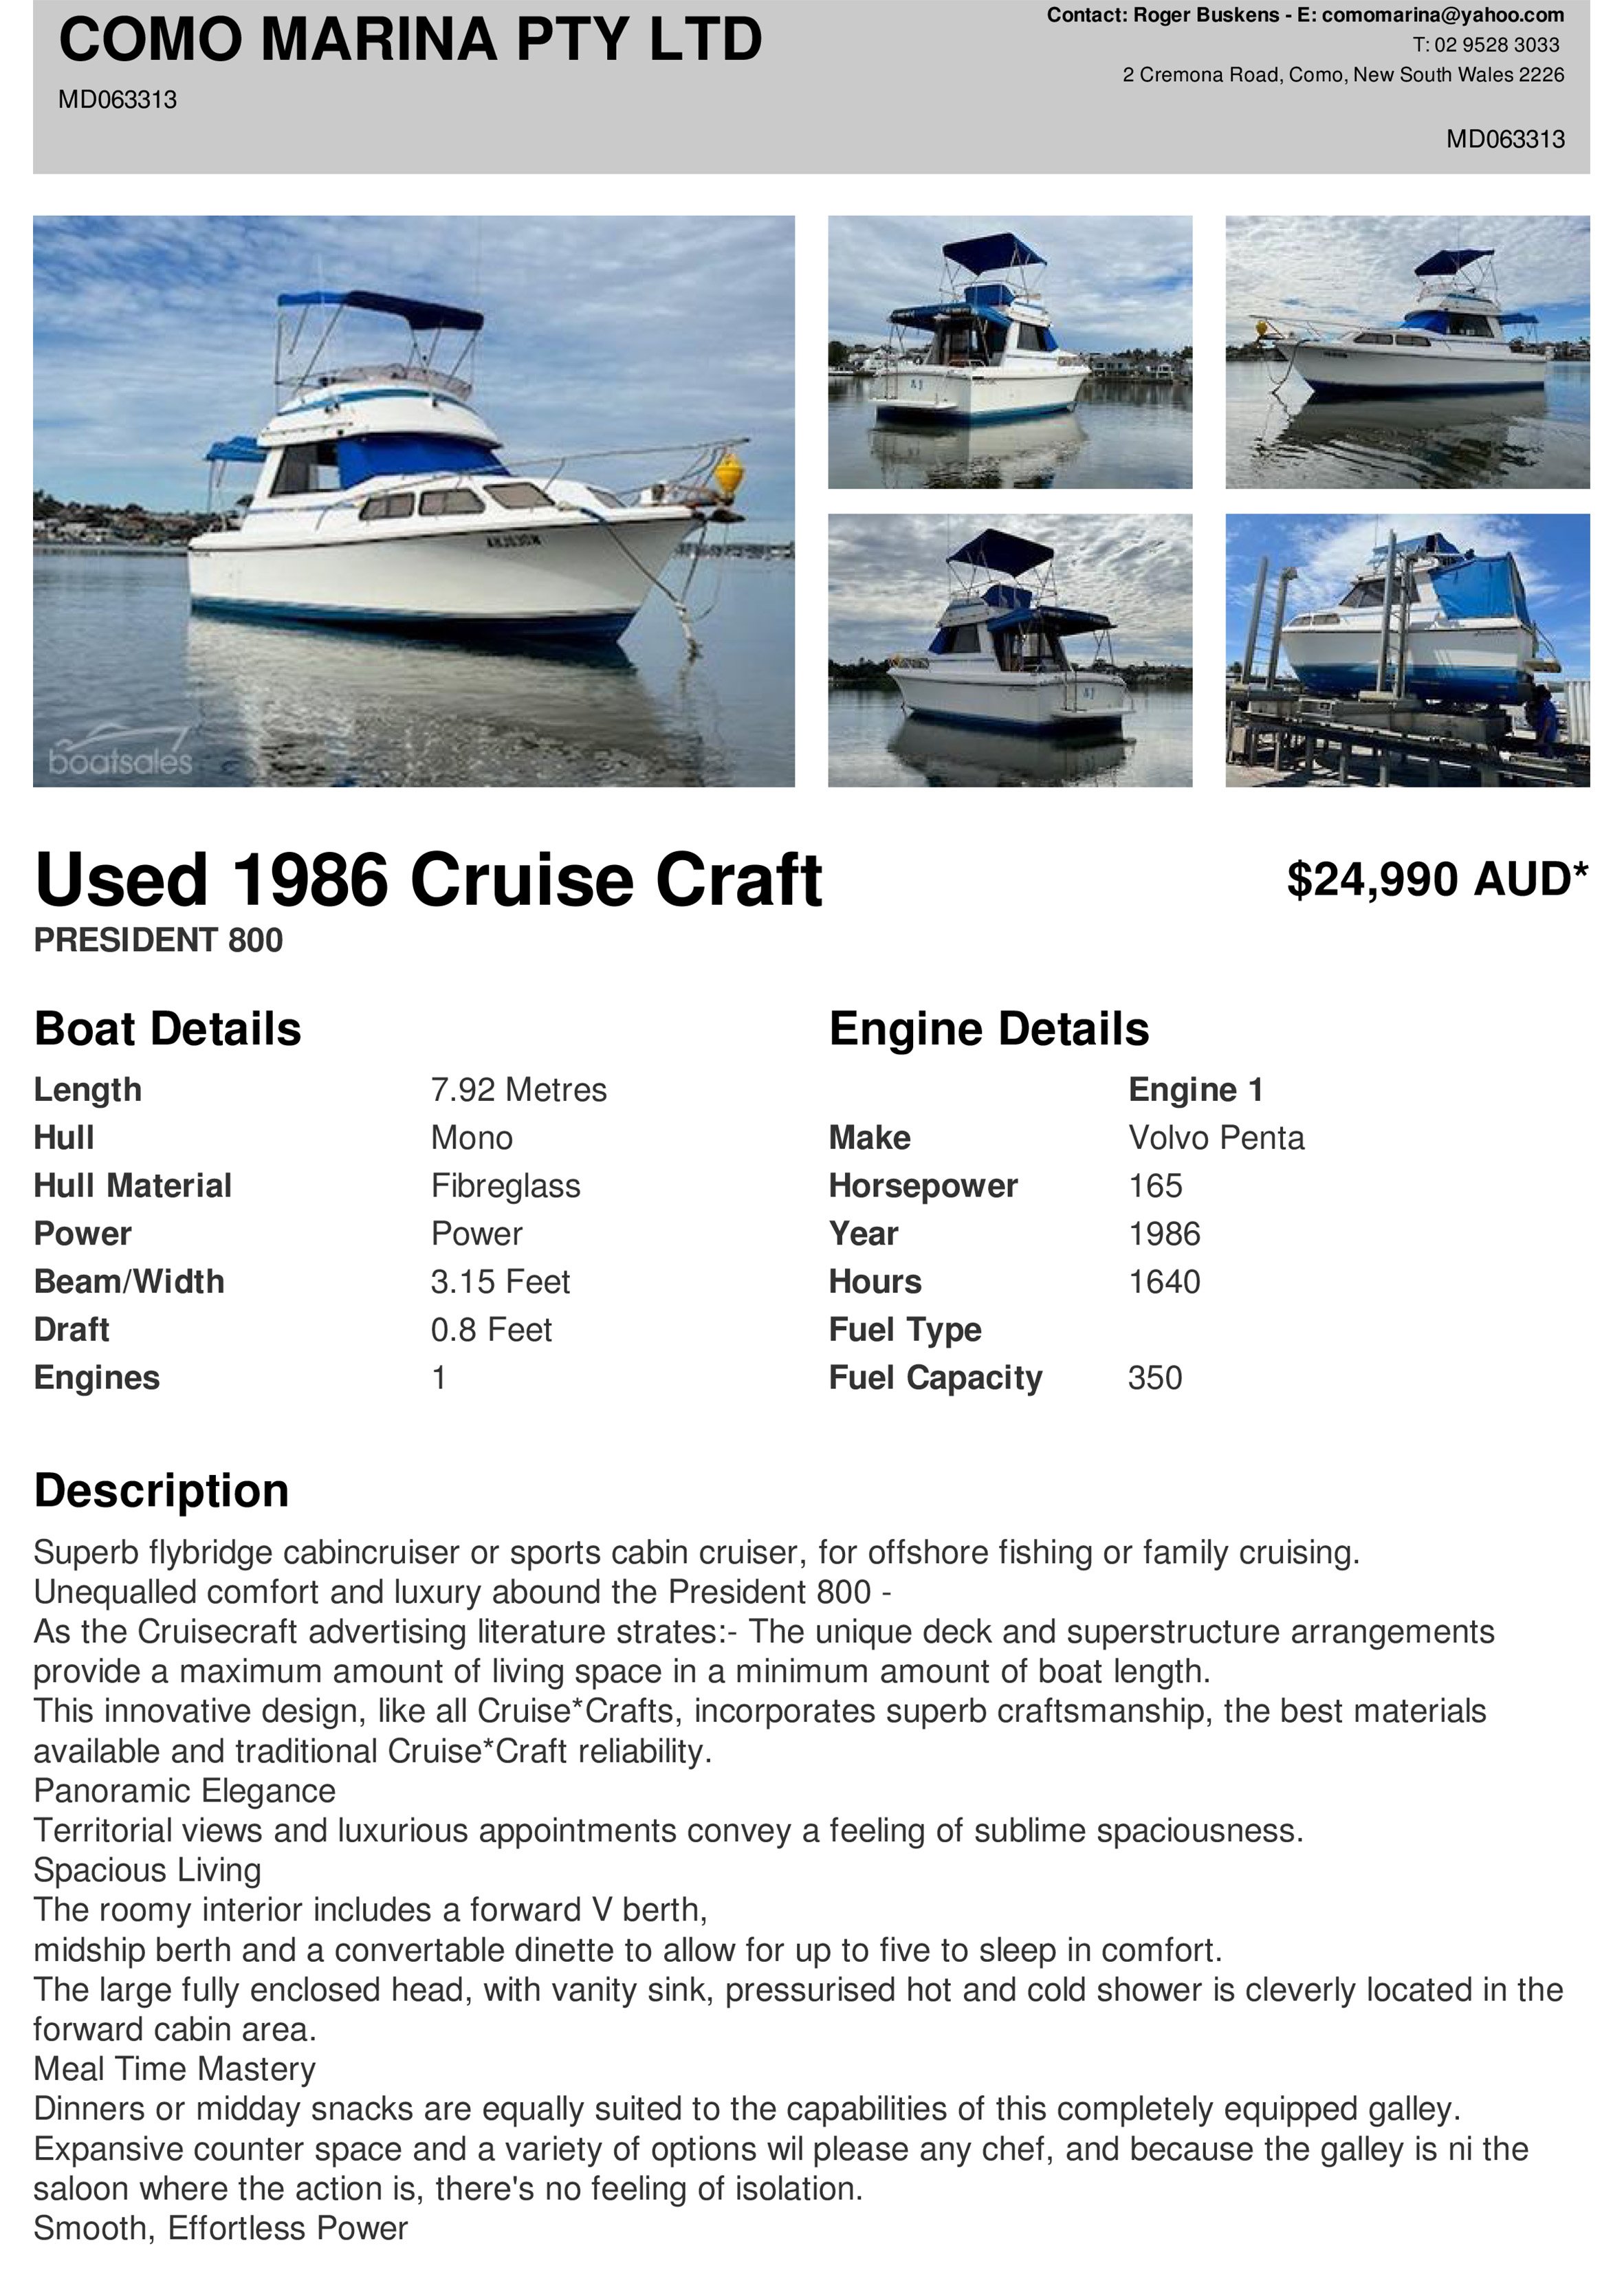 1986_Cruise Craft_PRESIDENT 800(1).jpg